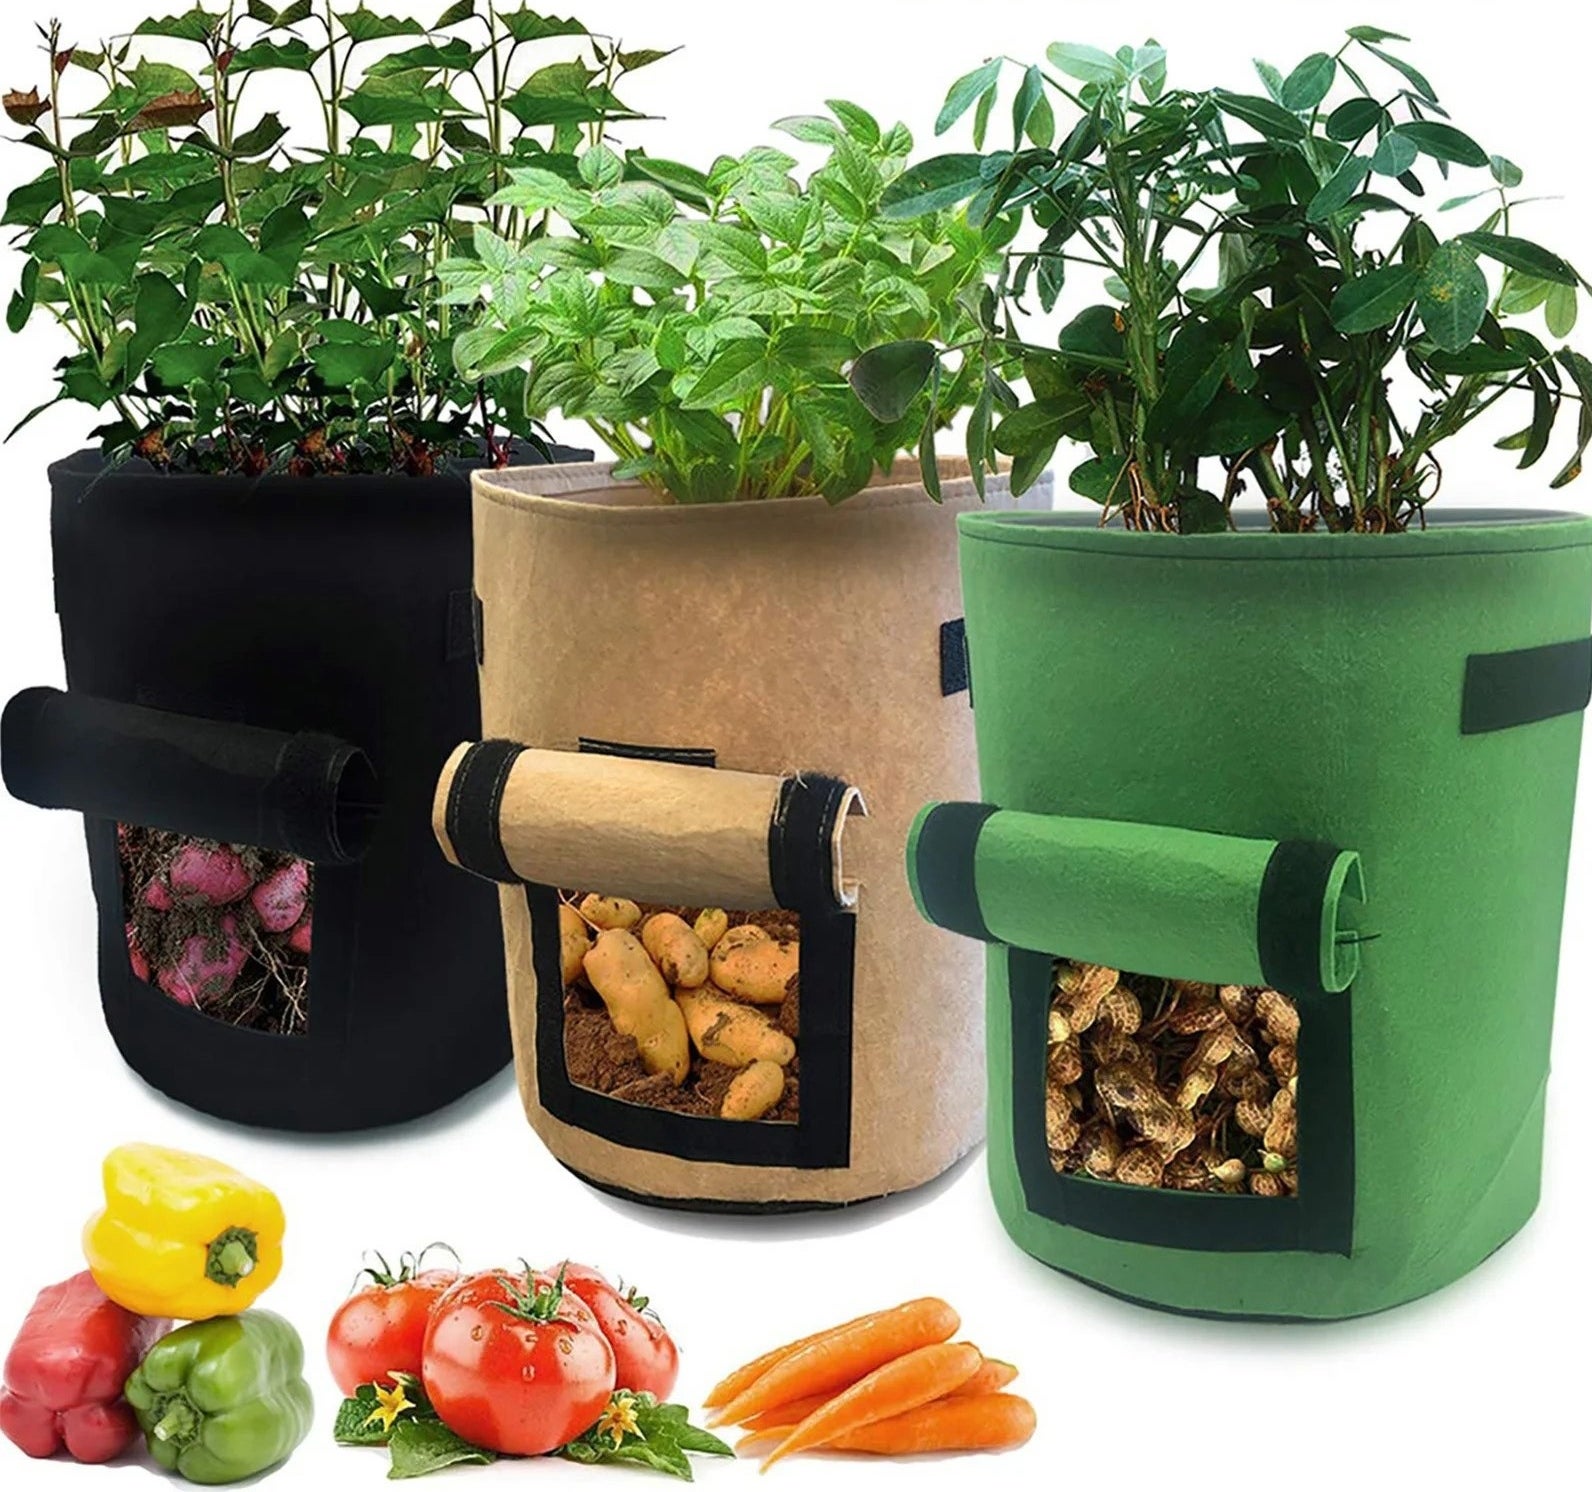 The three-piece grow bag planter